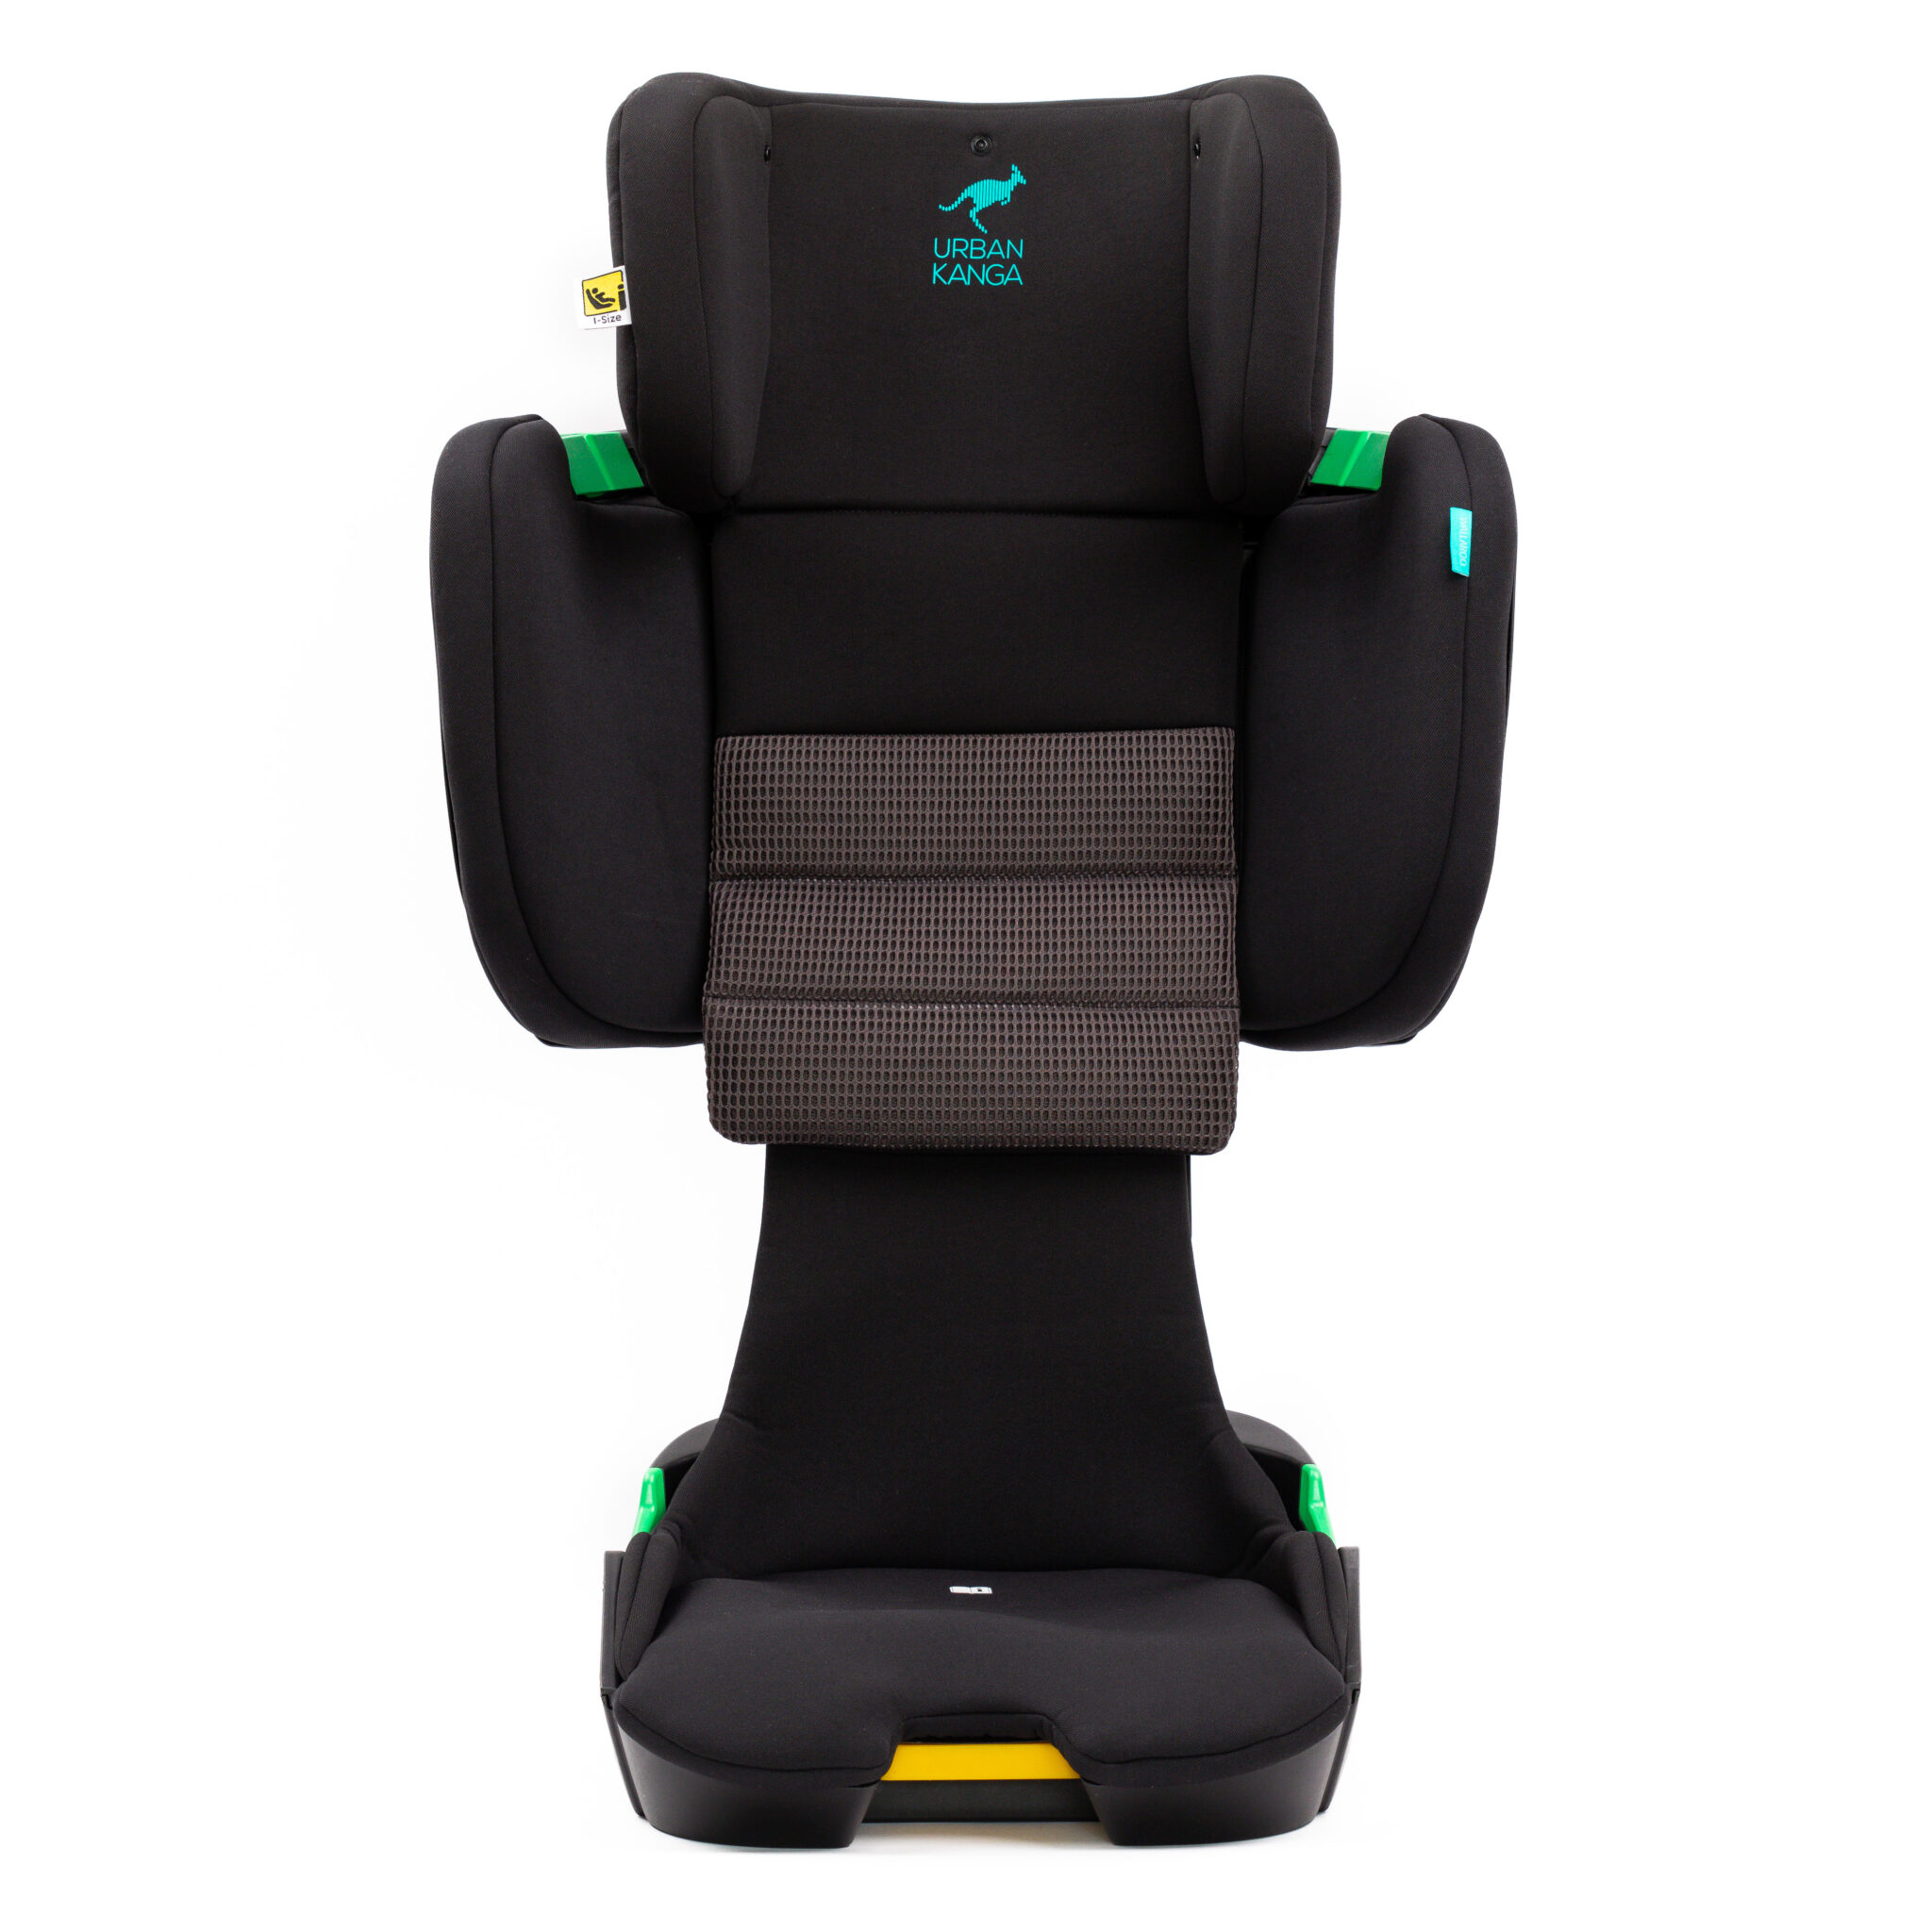 urban kanga travel car seat portable and foldable